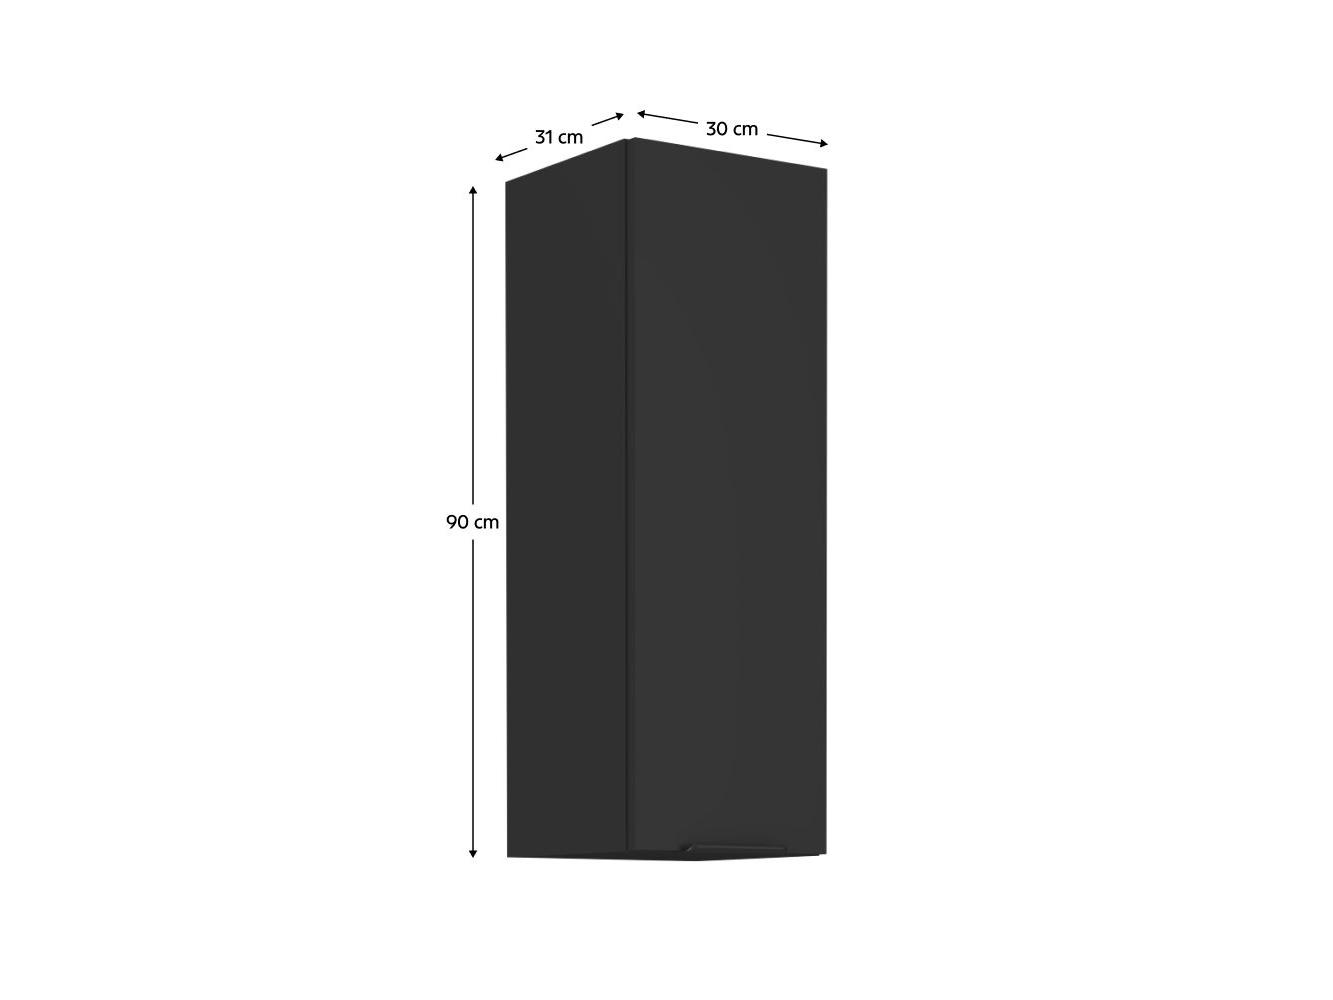 Horní kuchyňská skříňka Sobera 30 G 90 1F (černá)